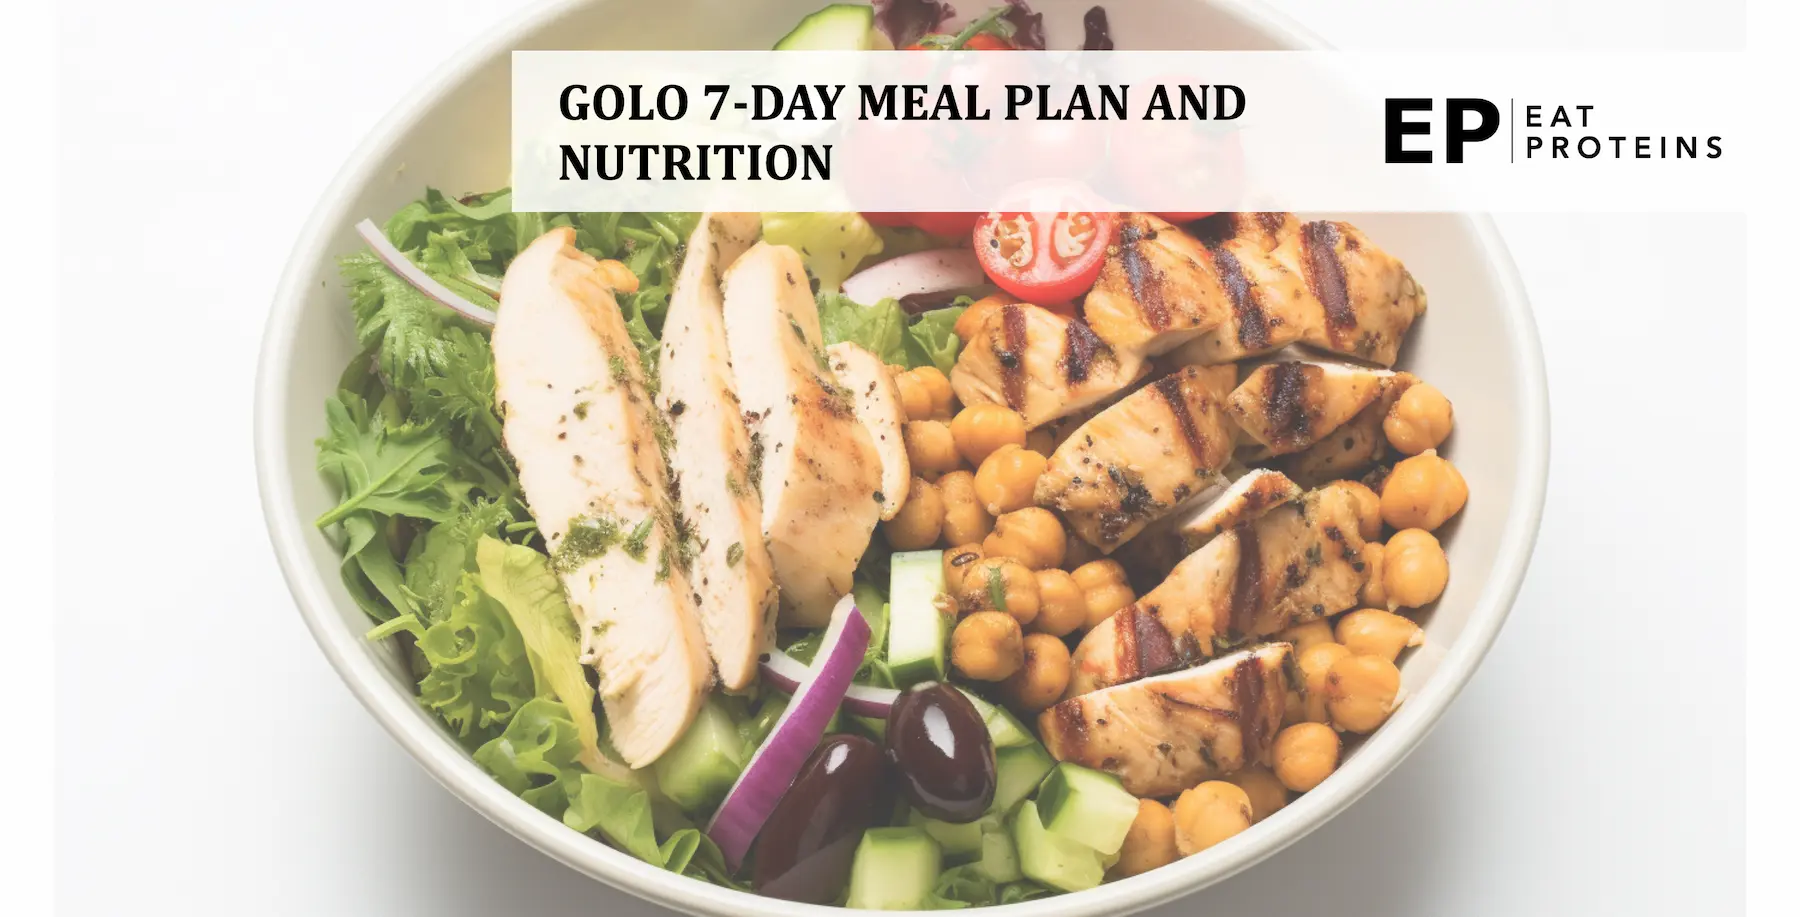 GOLO diet meal plan